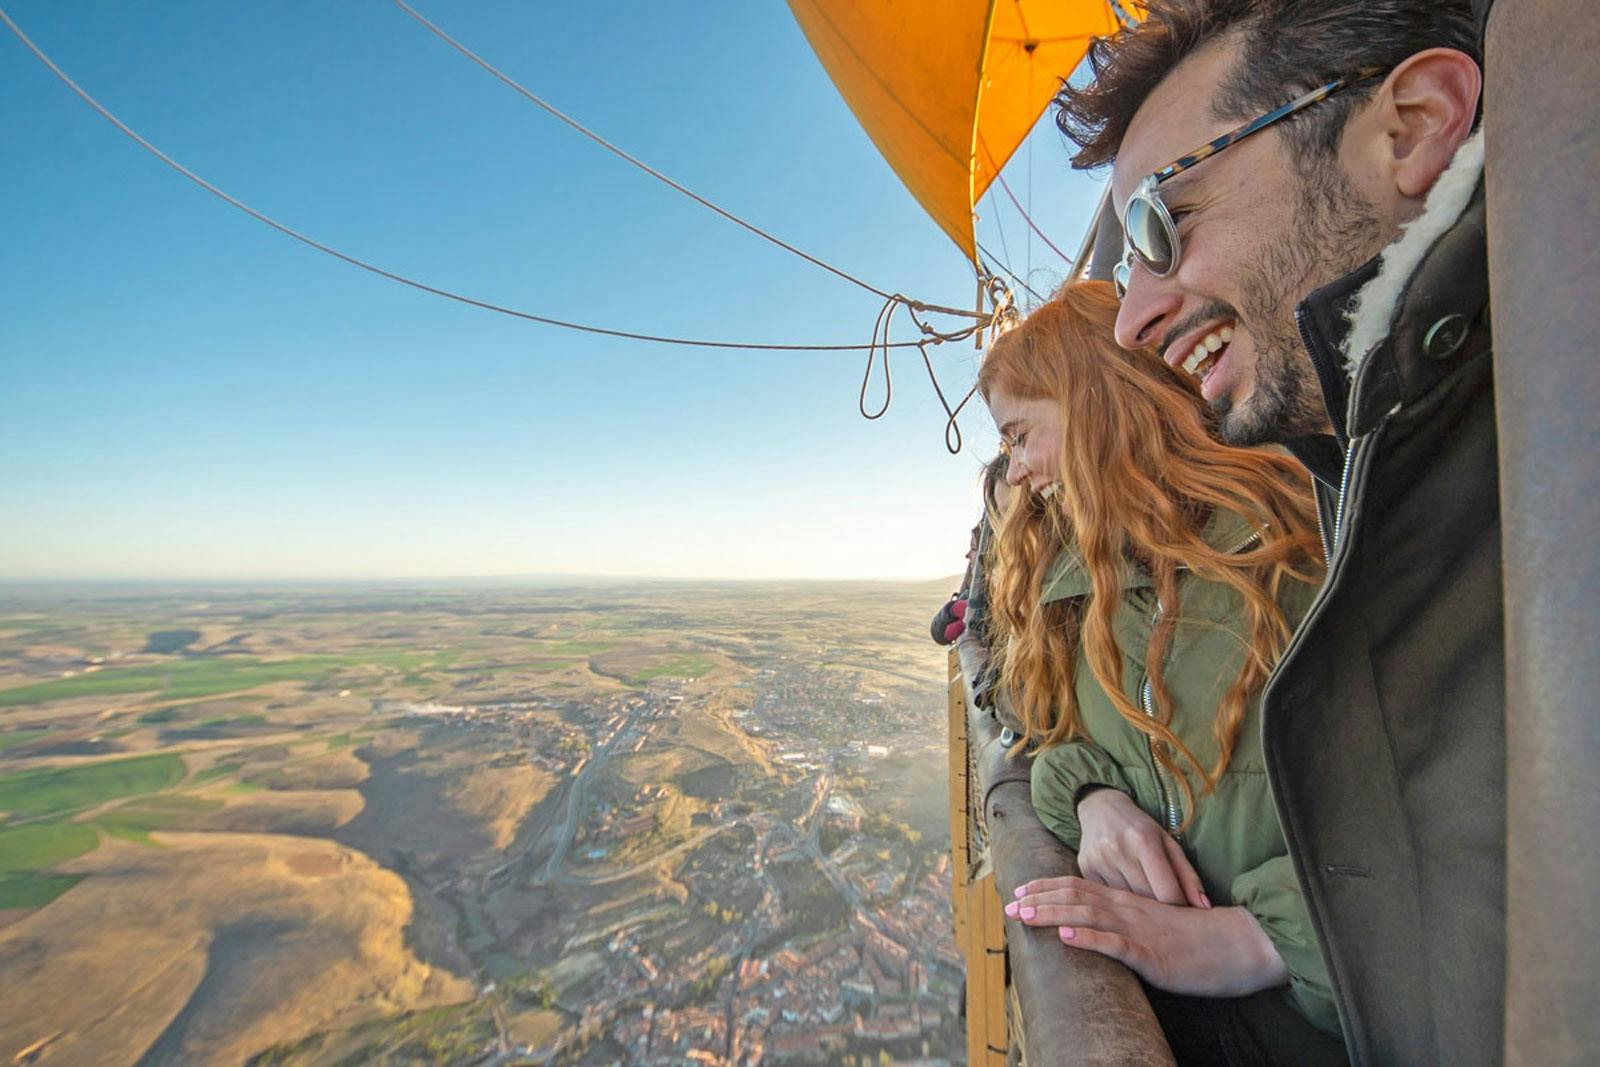 Segovia hot air balloon ride from Madrid